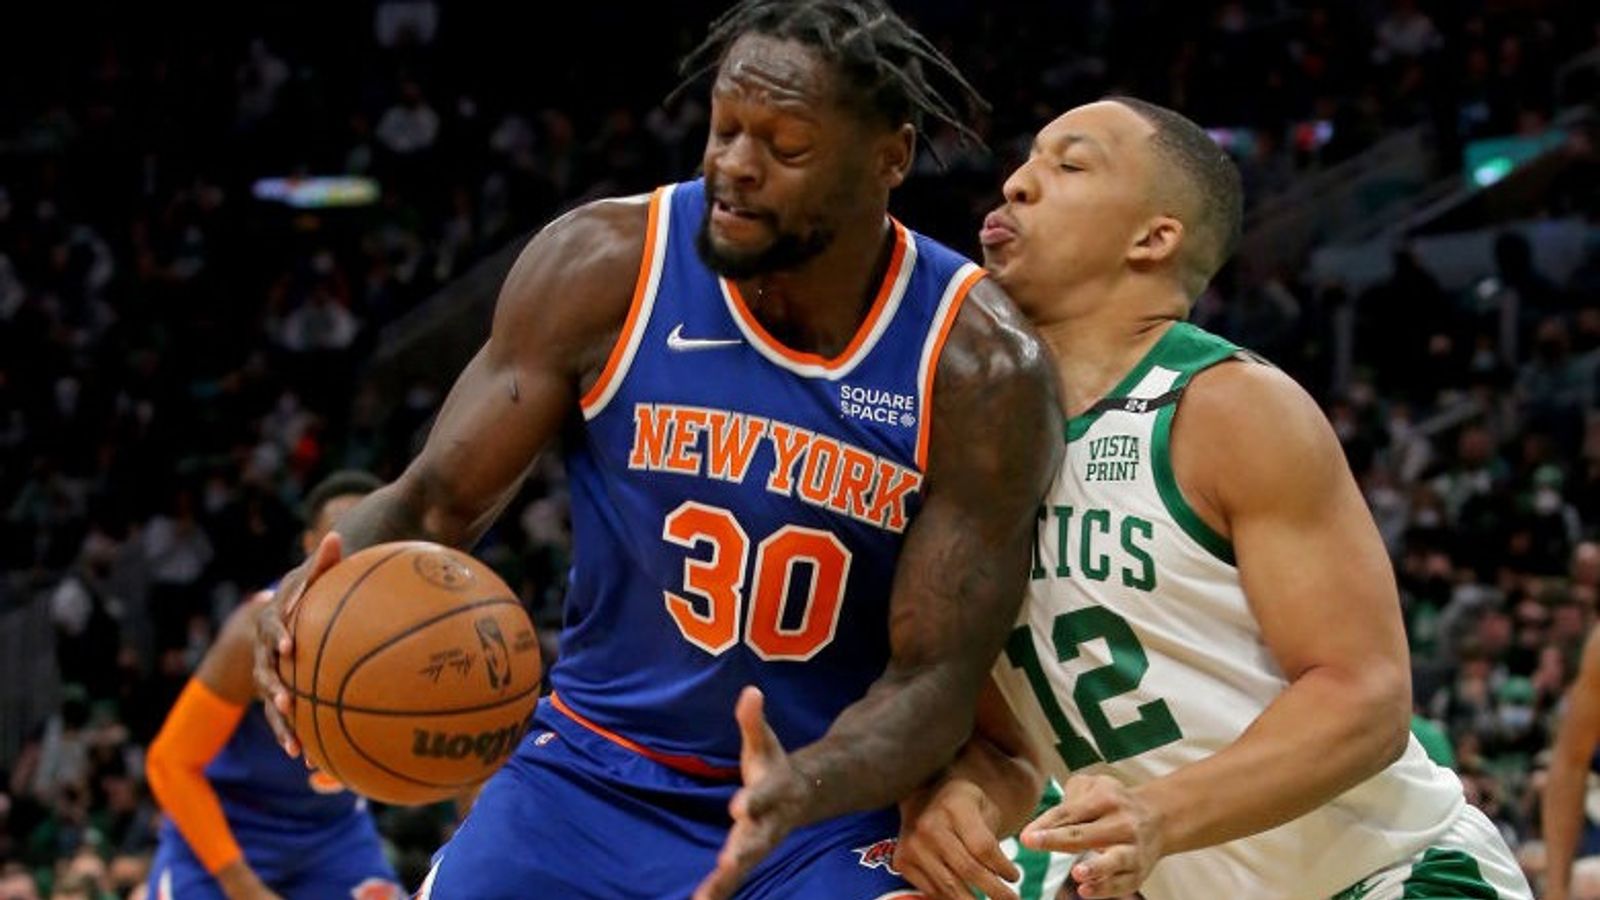 BSJ Game Report: Celtics 123, Knicks 110 - C's show their potential